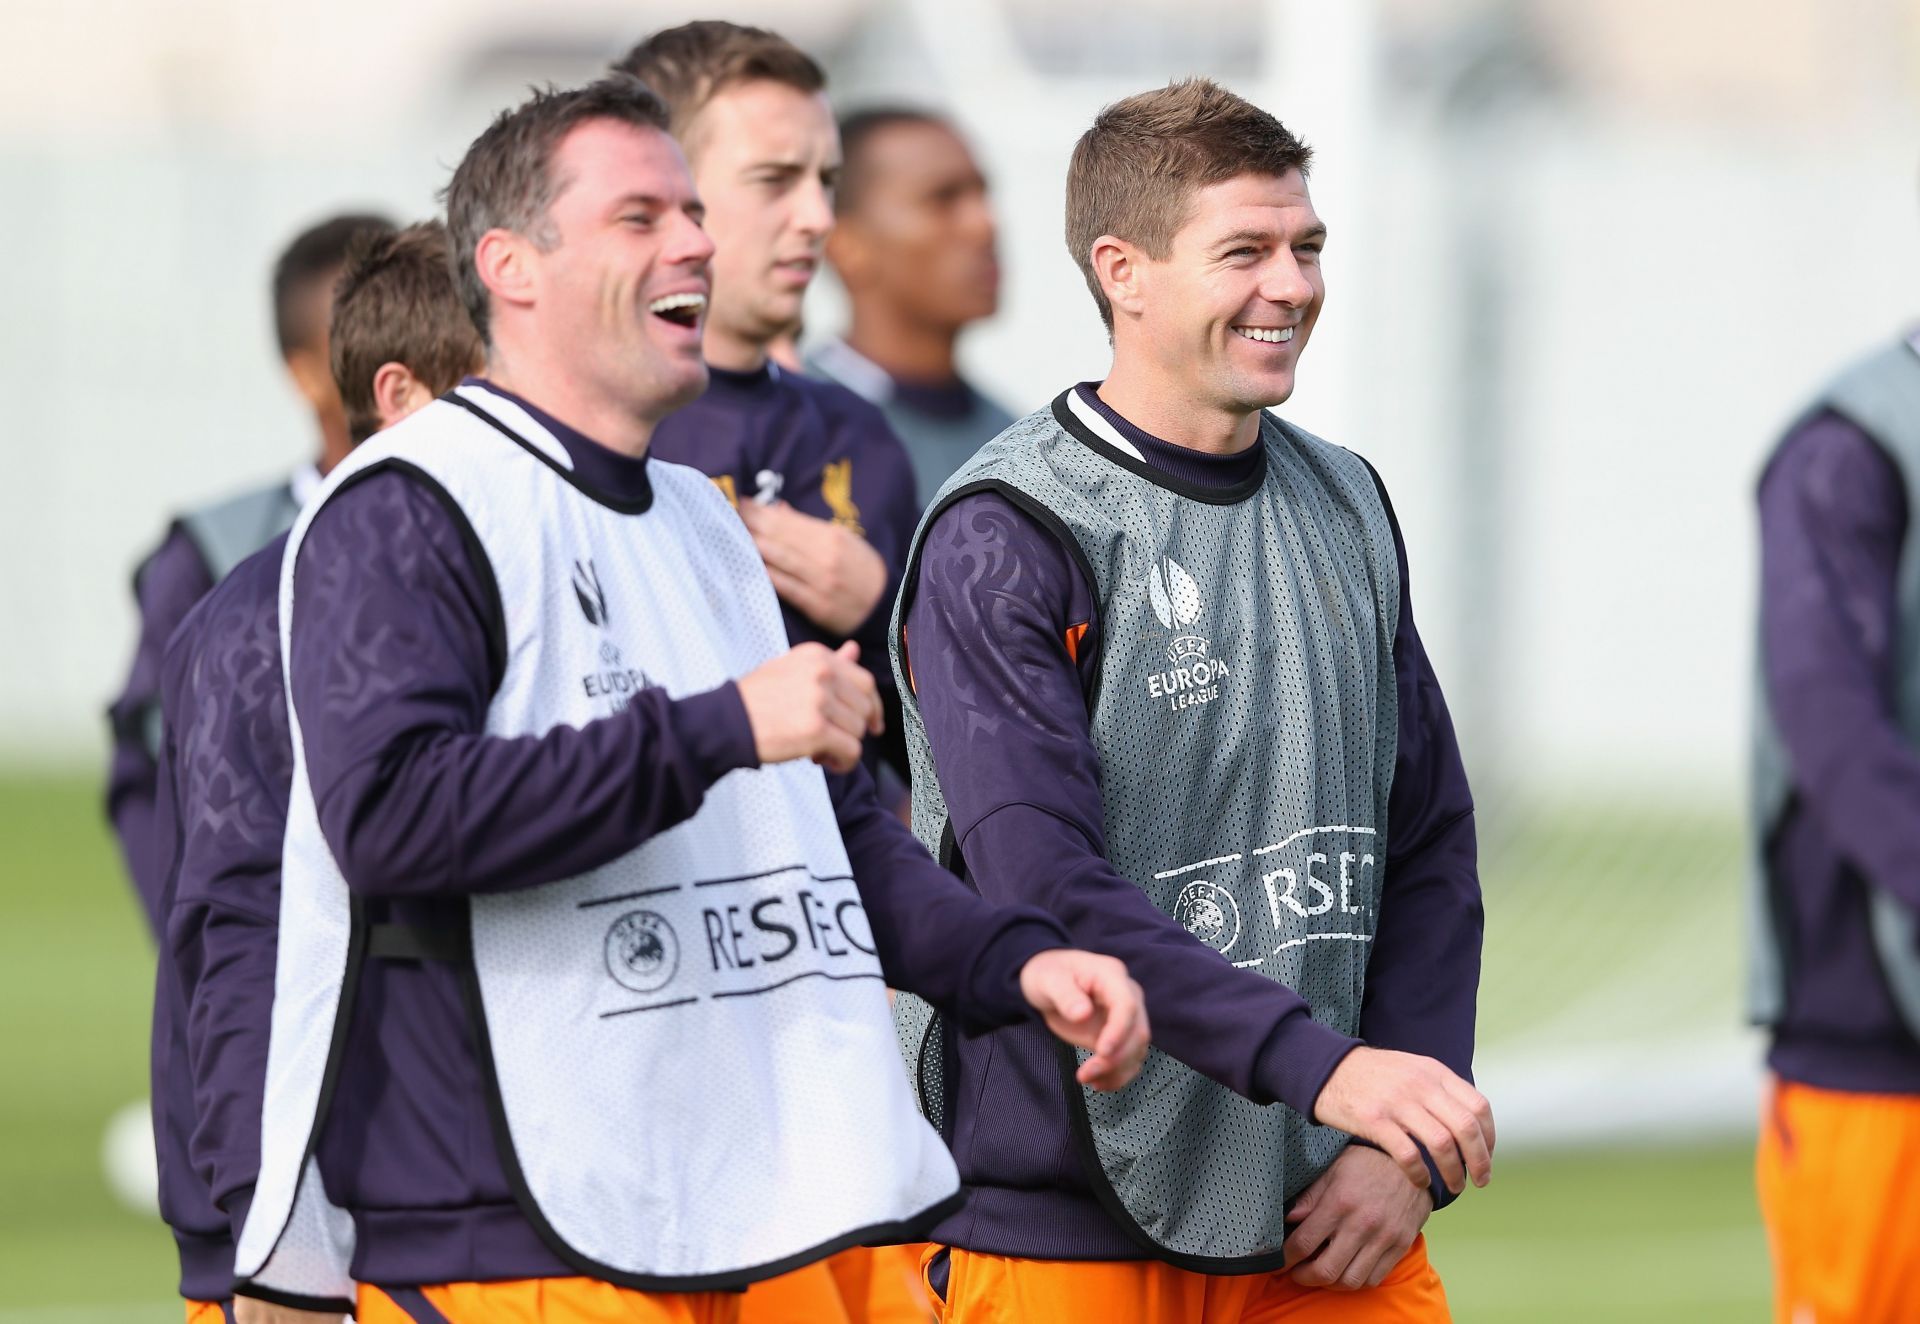 Steven Gerrard and Jamie Carragher (via Getty Images)